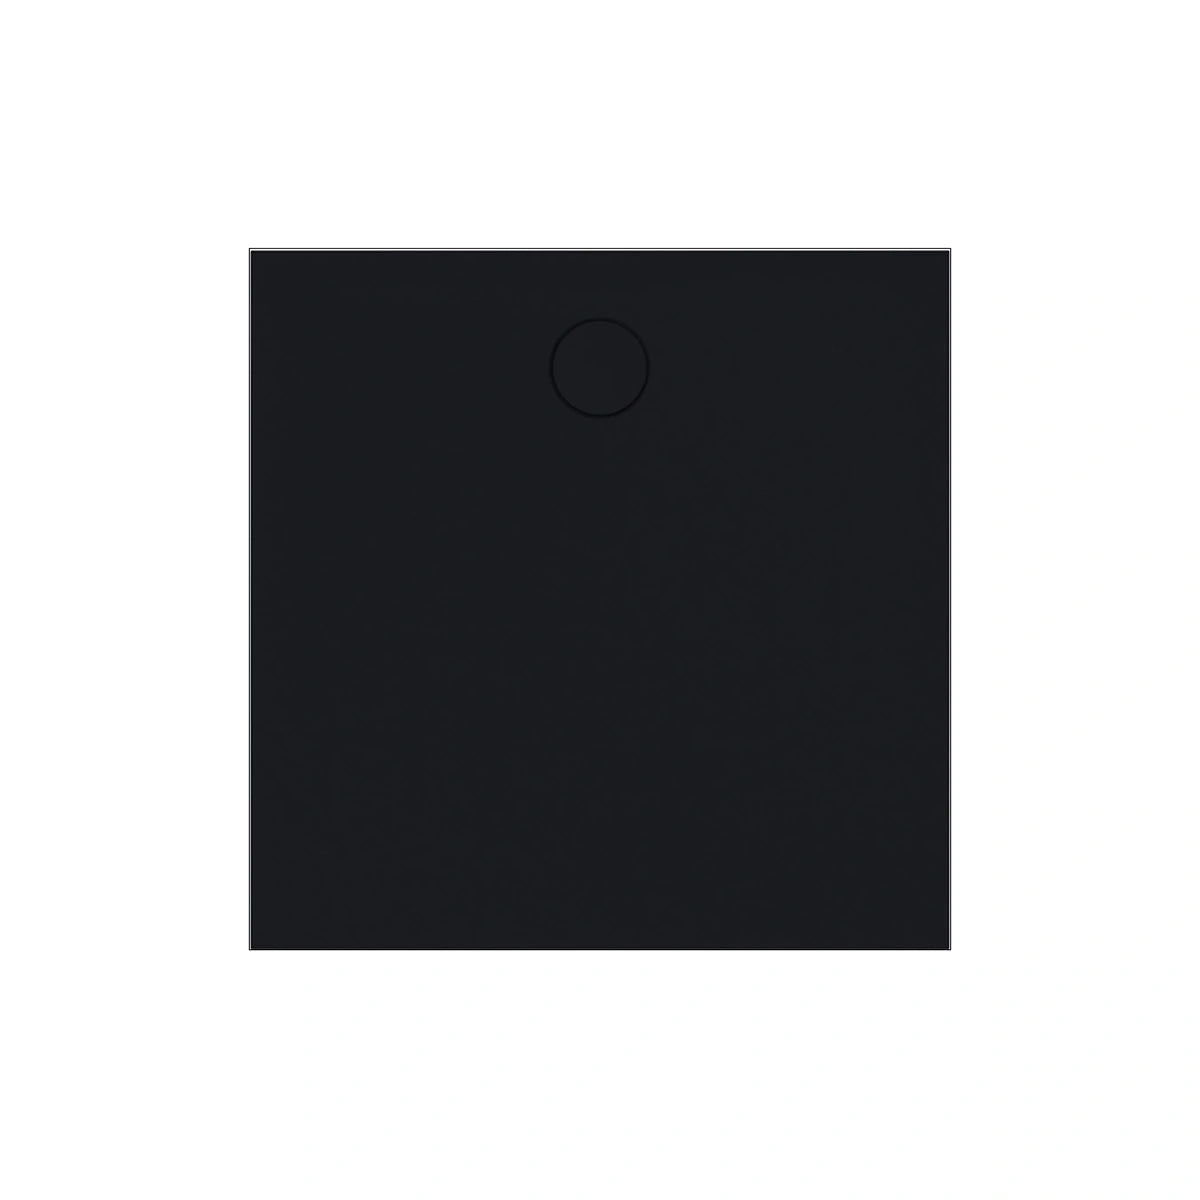 Plato de ducha Shadow - 90cm x 90cm - estructura negra